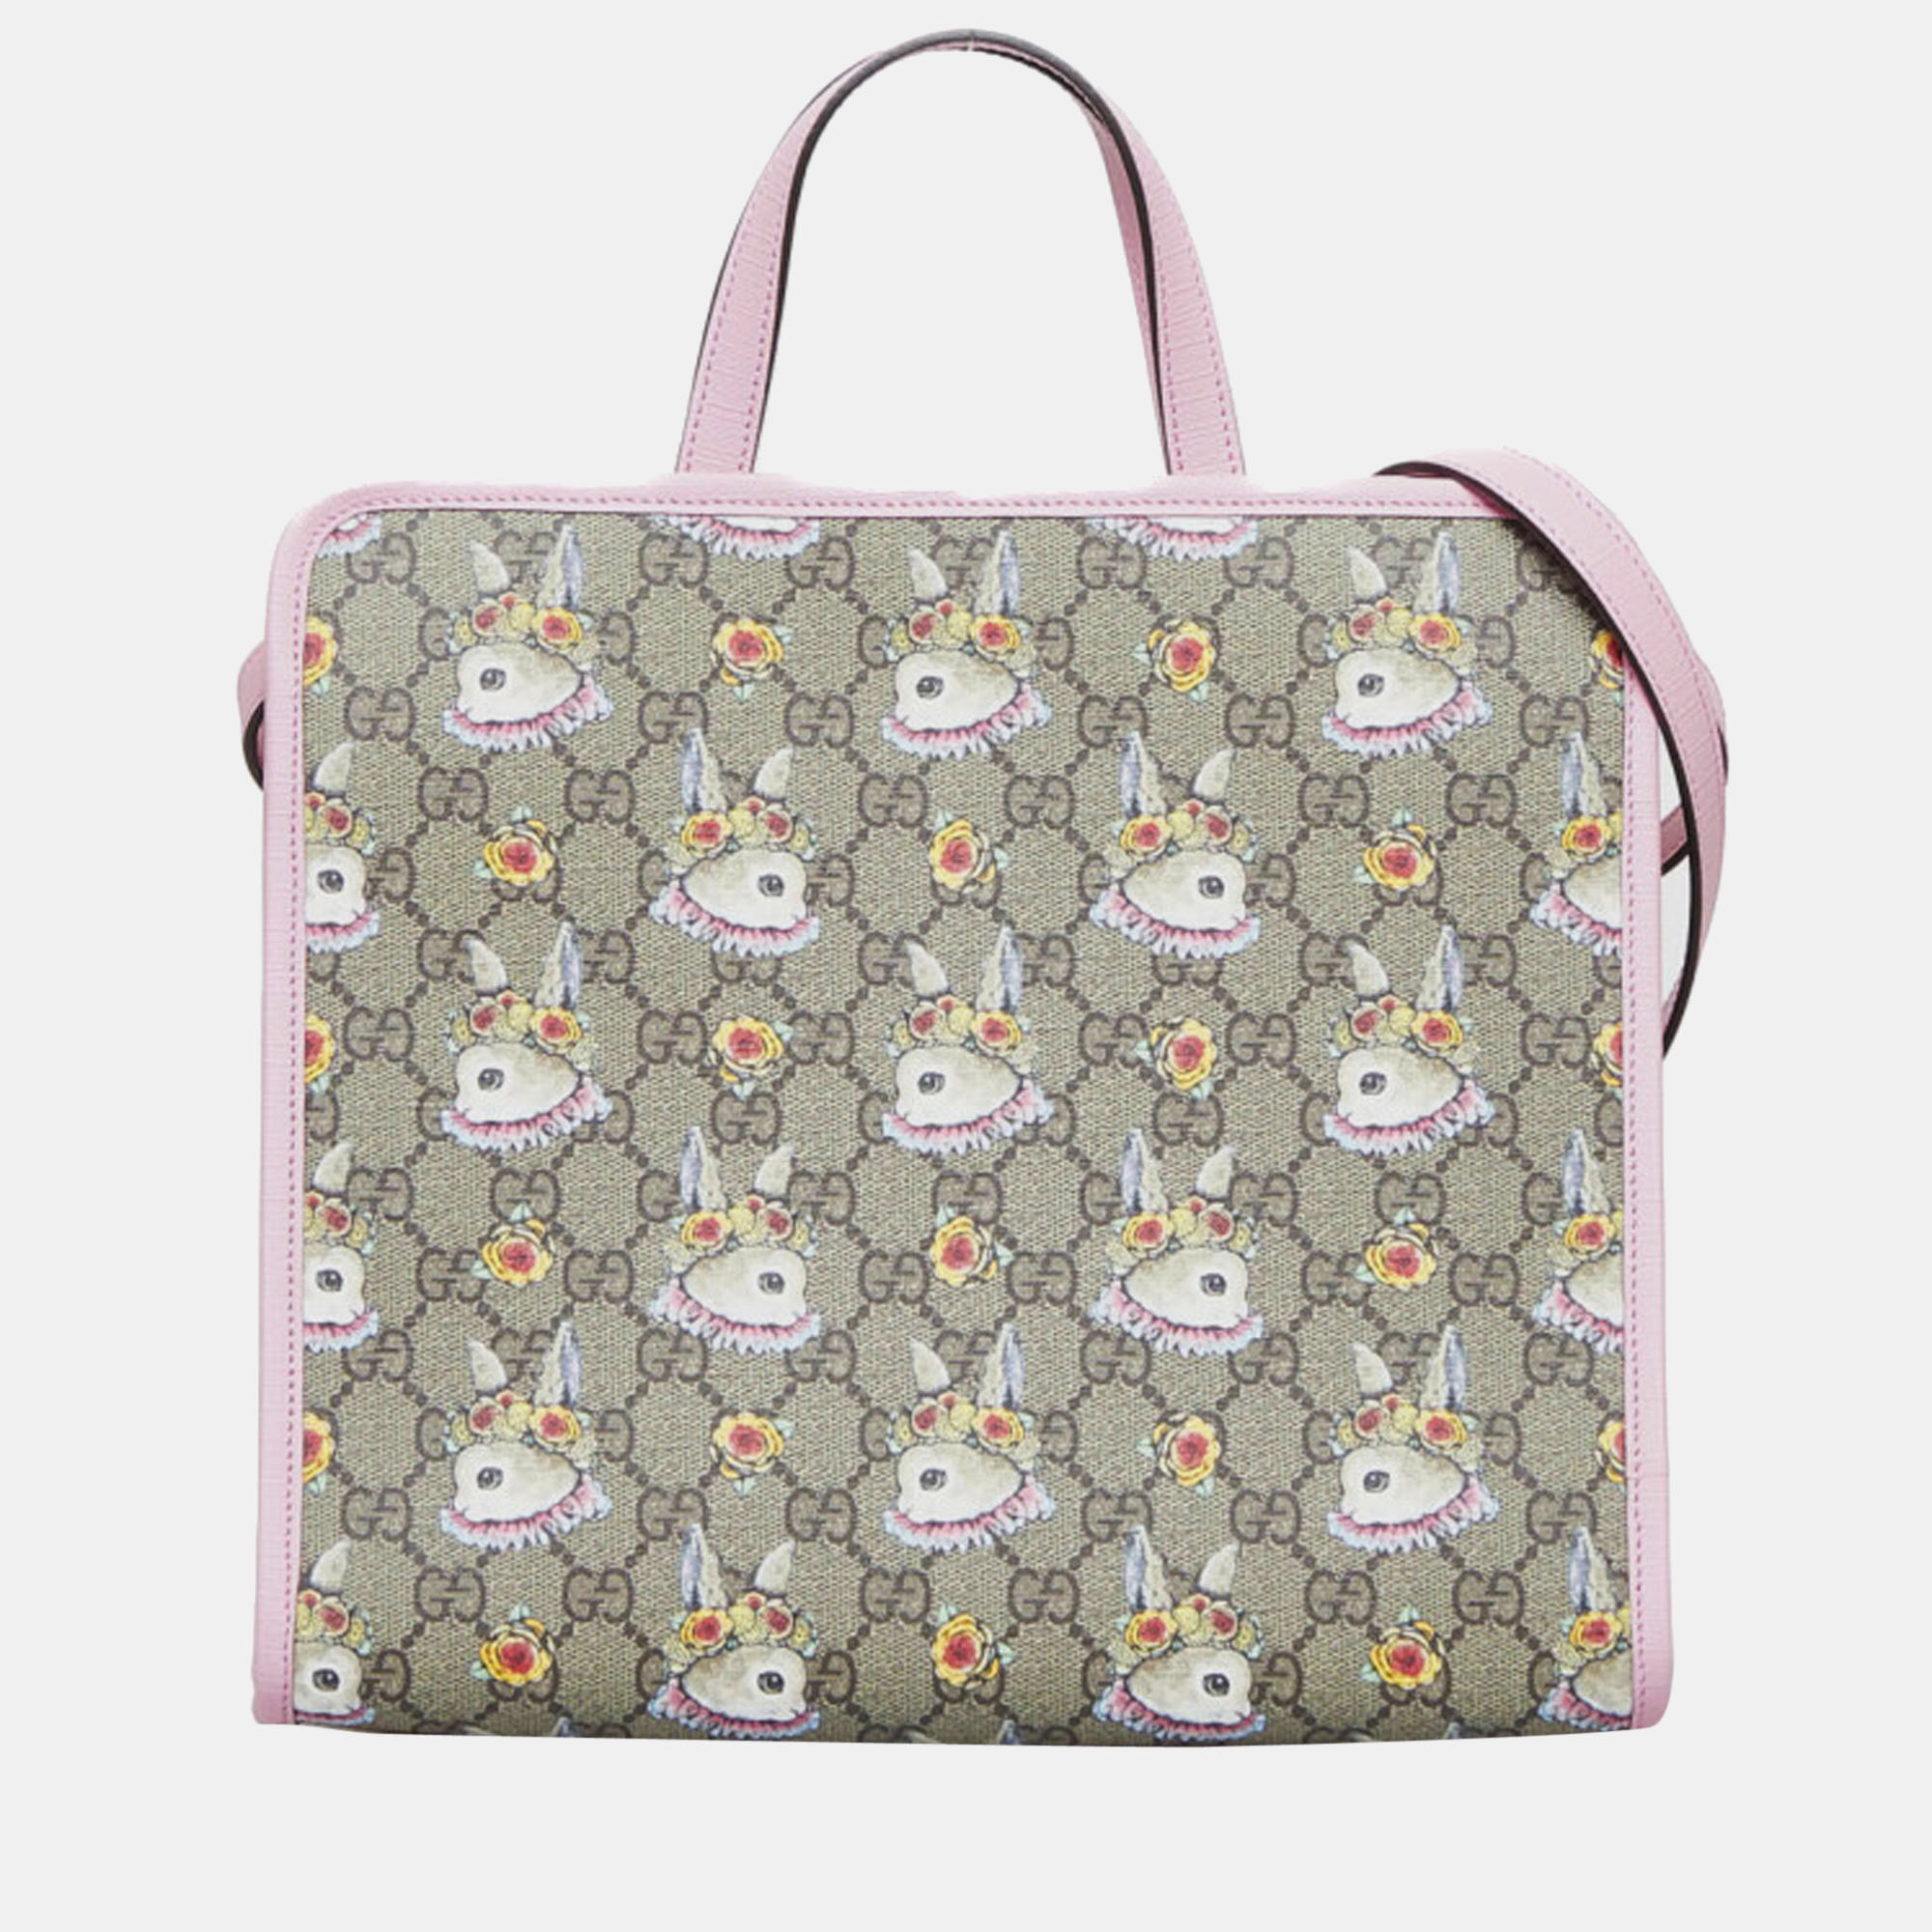 Gucci Brown Canvas GG Supreme Rabbit Handbag